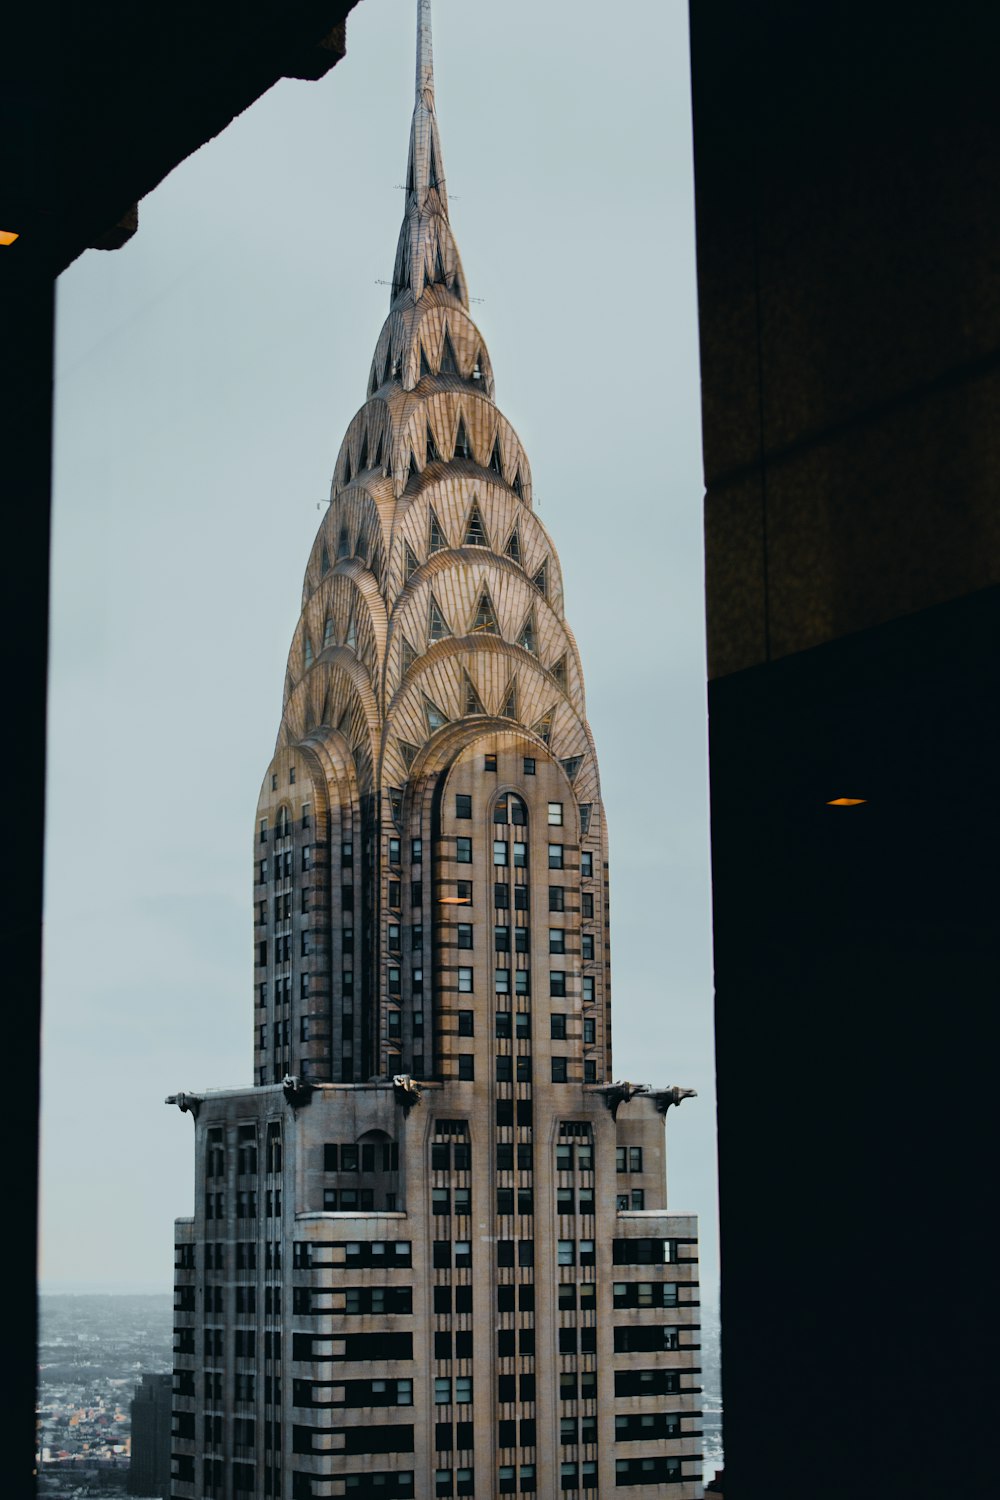 500 Chrysler Building Pictures Hd Download Free Images On Unsplash